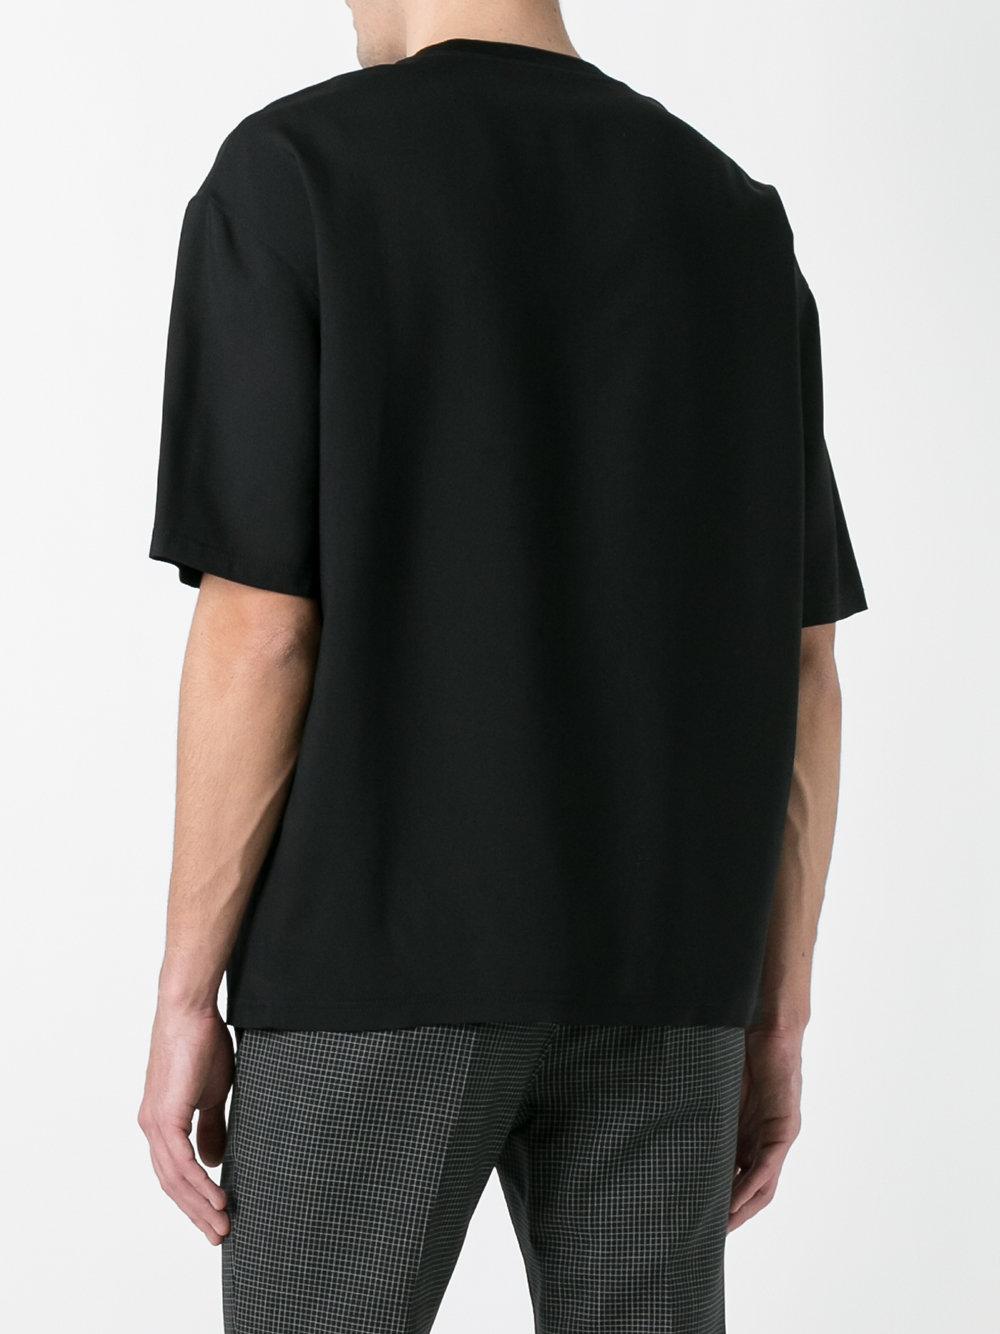 Lyst - Lanvin Fluid Loose Fit T-shirt in Black for Men